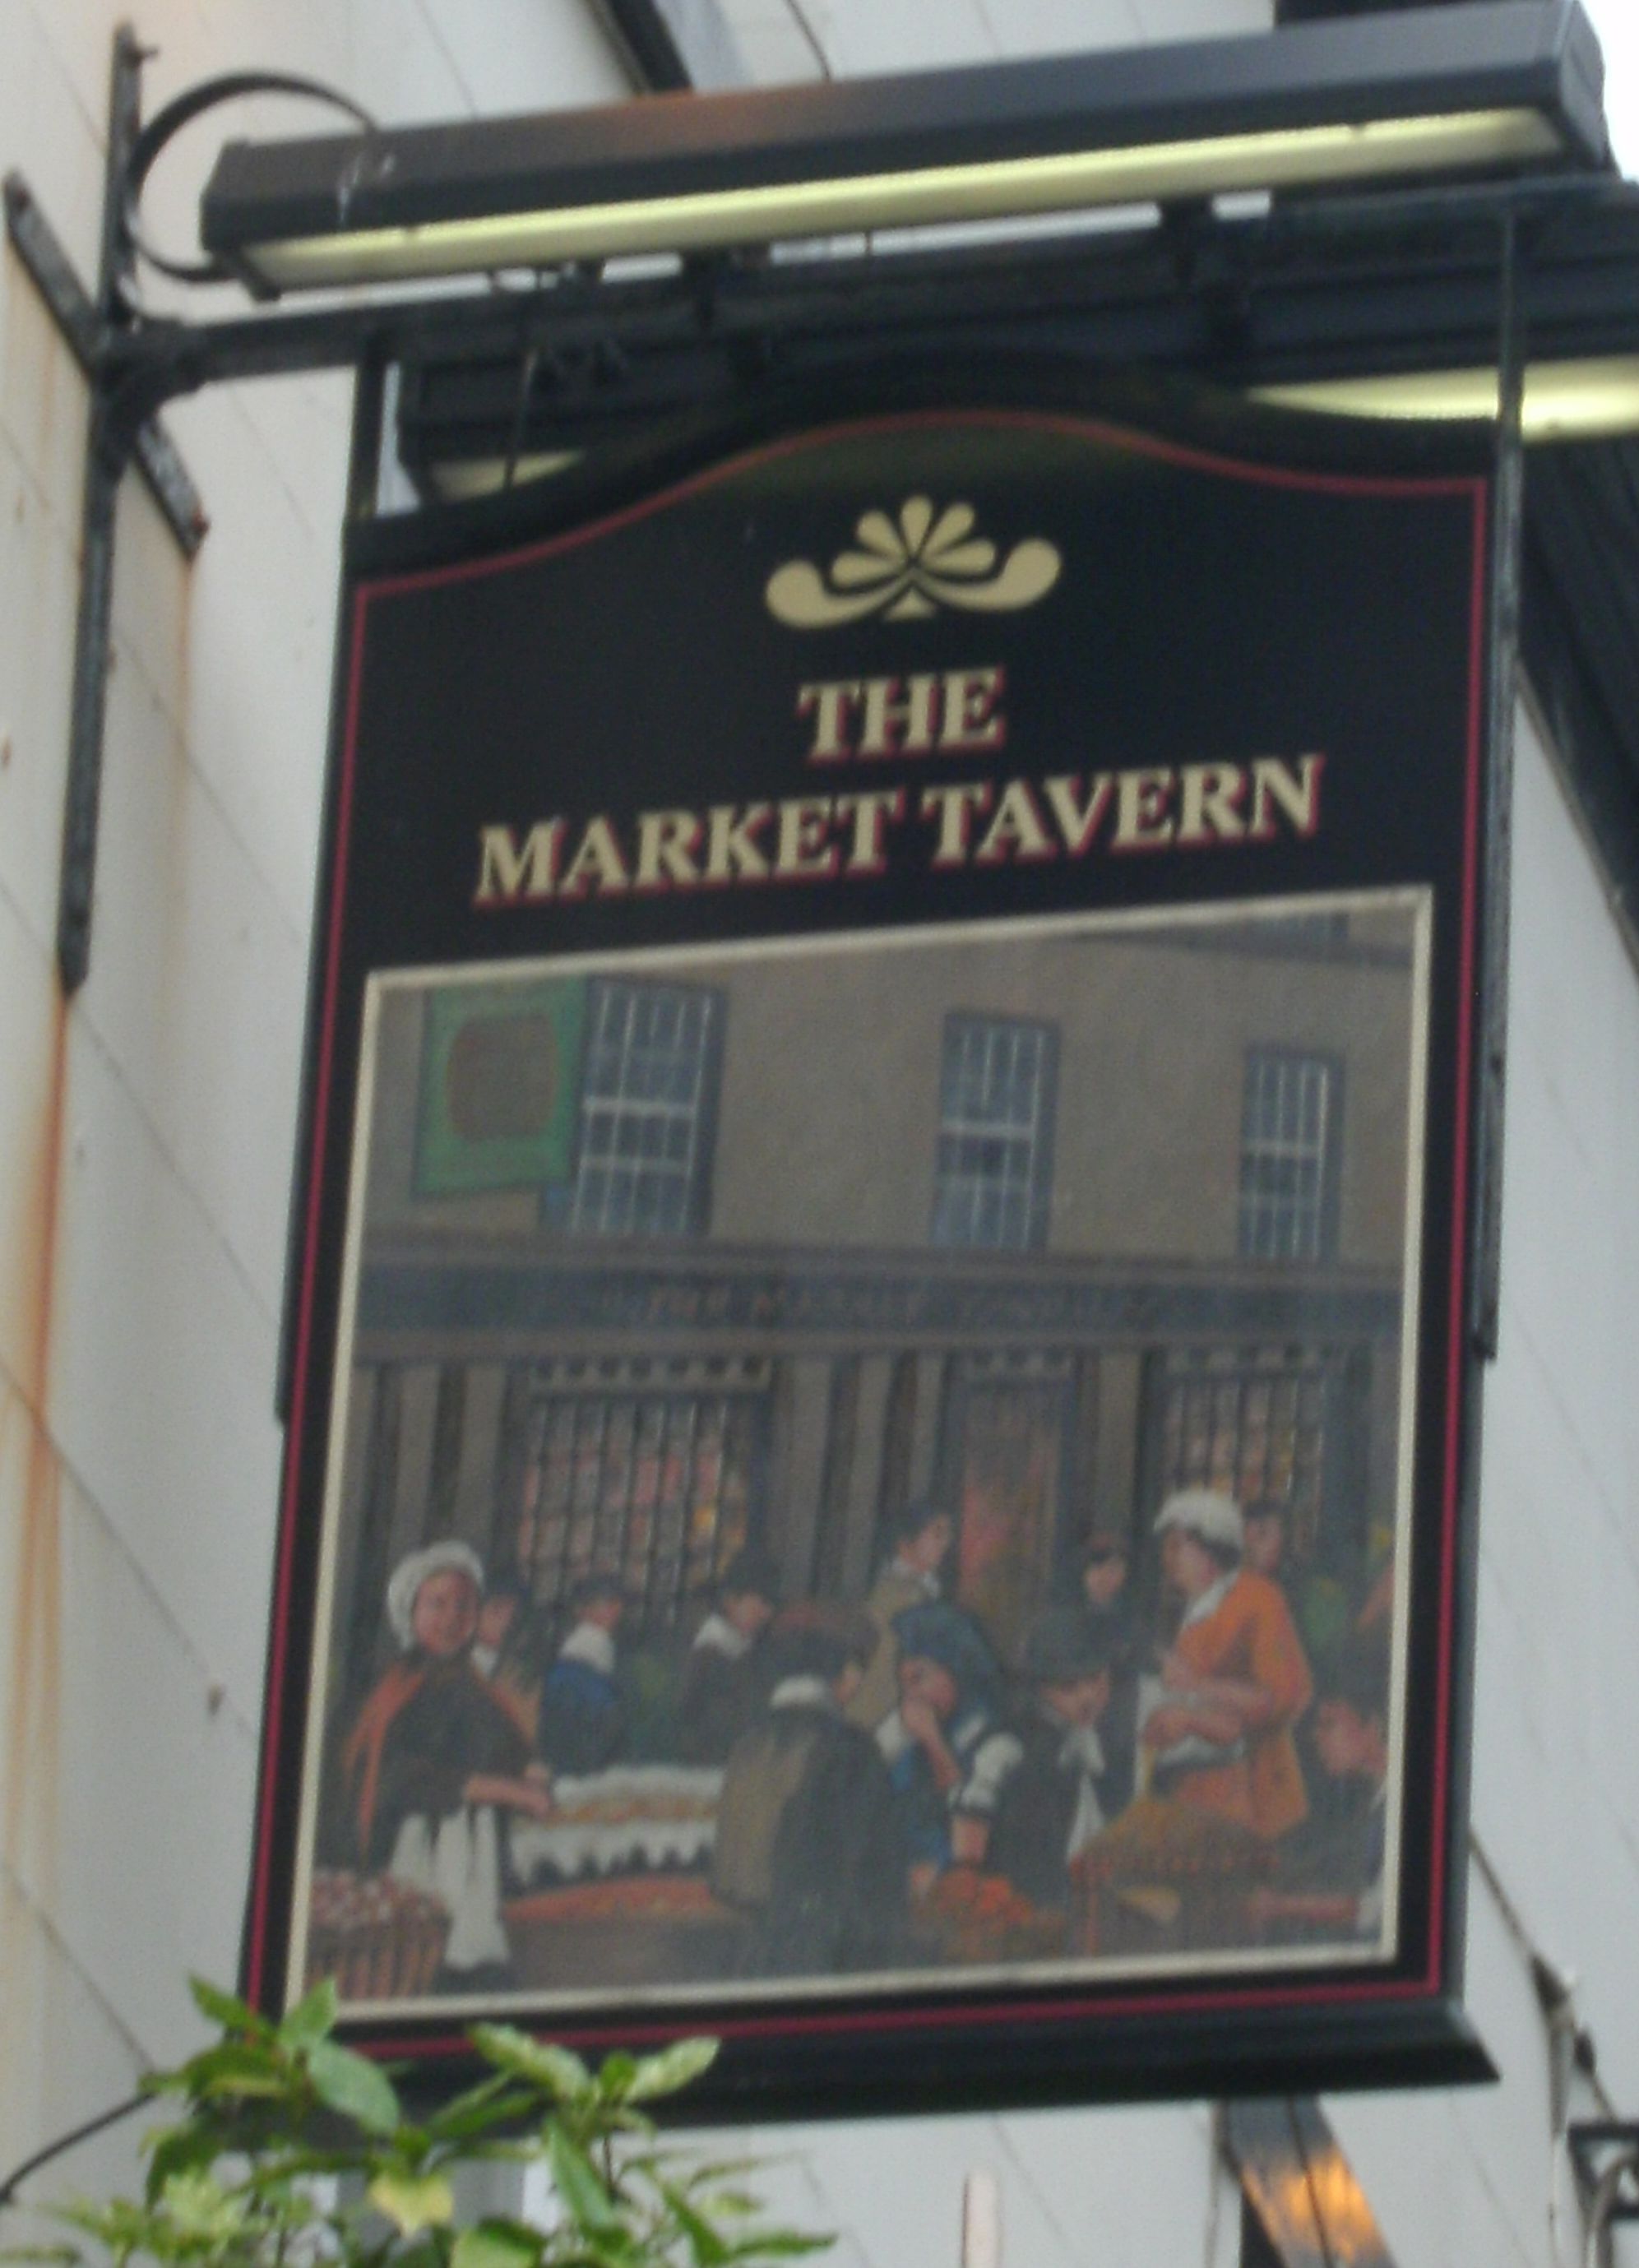 Photo taken by me – The Market Tavern pub sign, Preston  